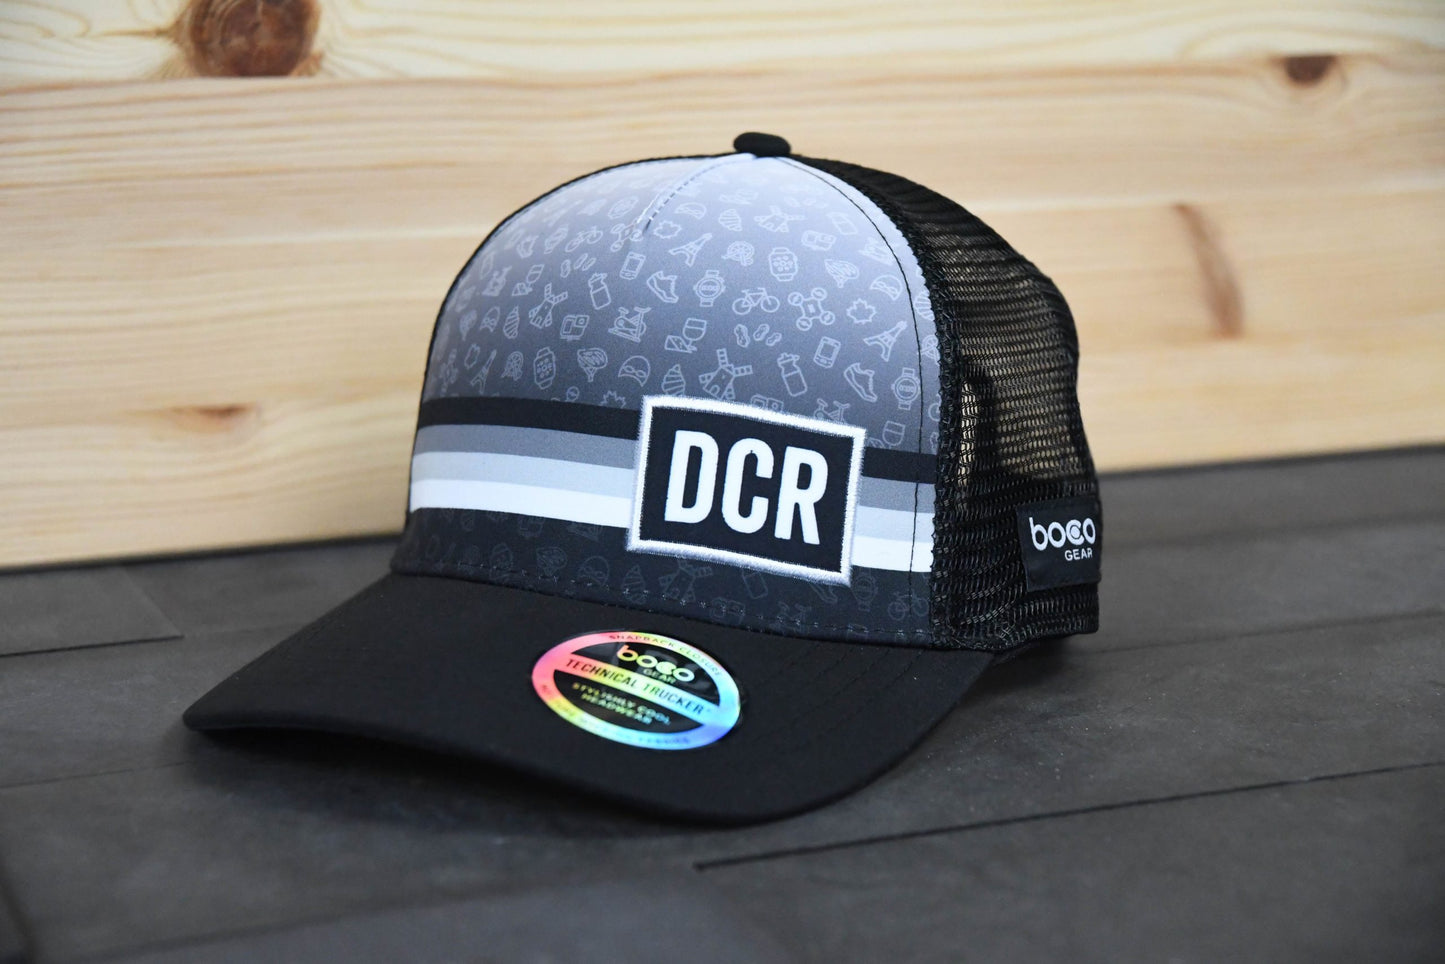 DC Rainmaker - Trucker Hat - Lifestyle Series